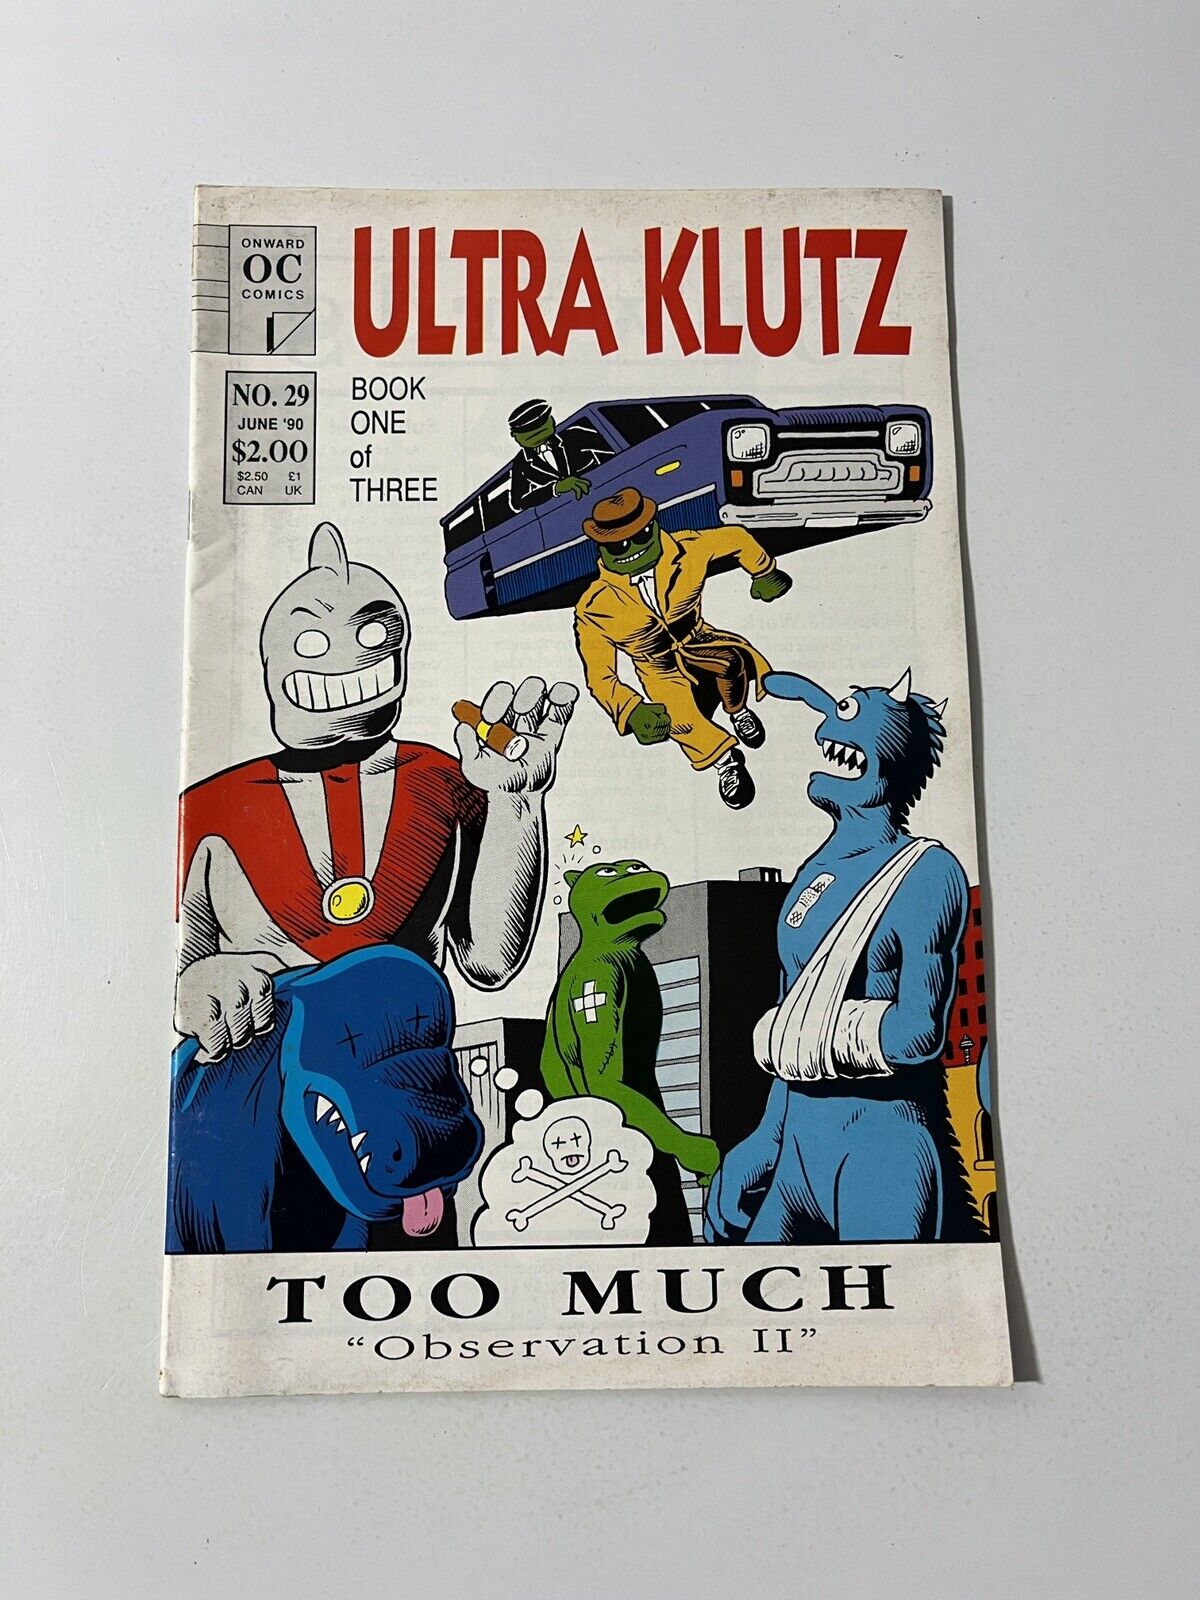 ULTRA KLUTZ #29 Onward Comics 1981 Indie Book